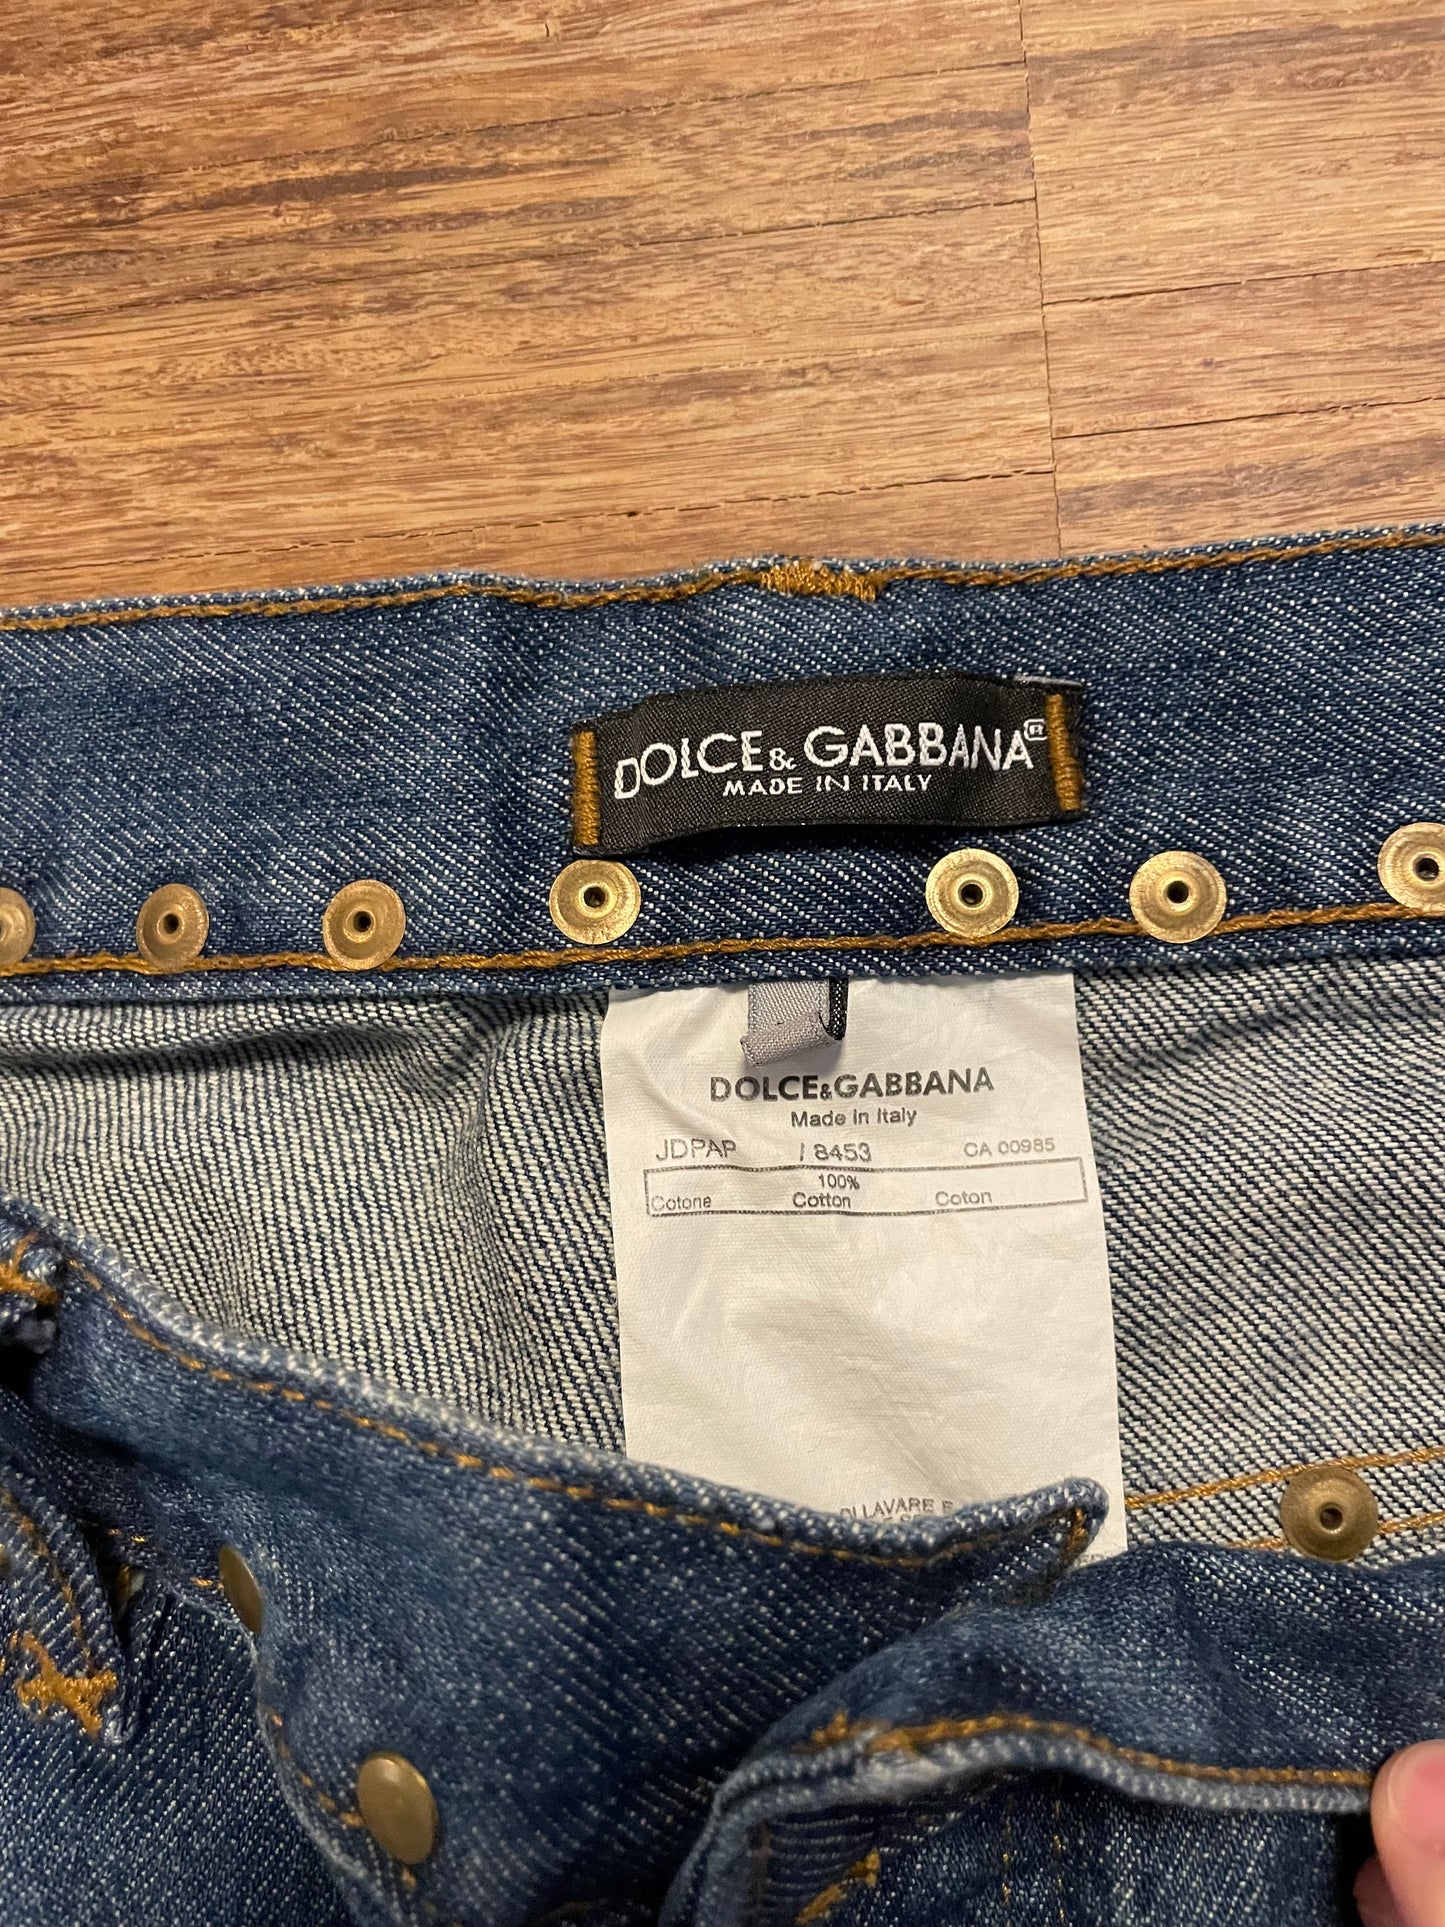 Dolce & Gabbana Jeans (M)